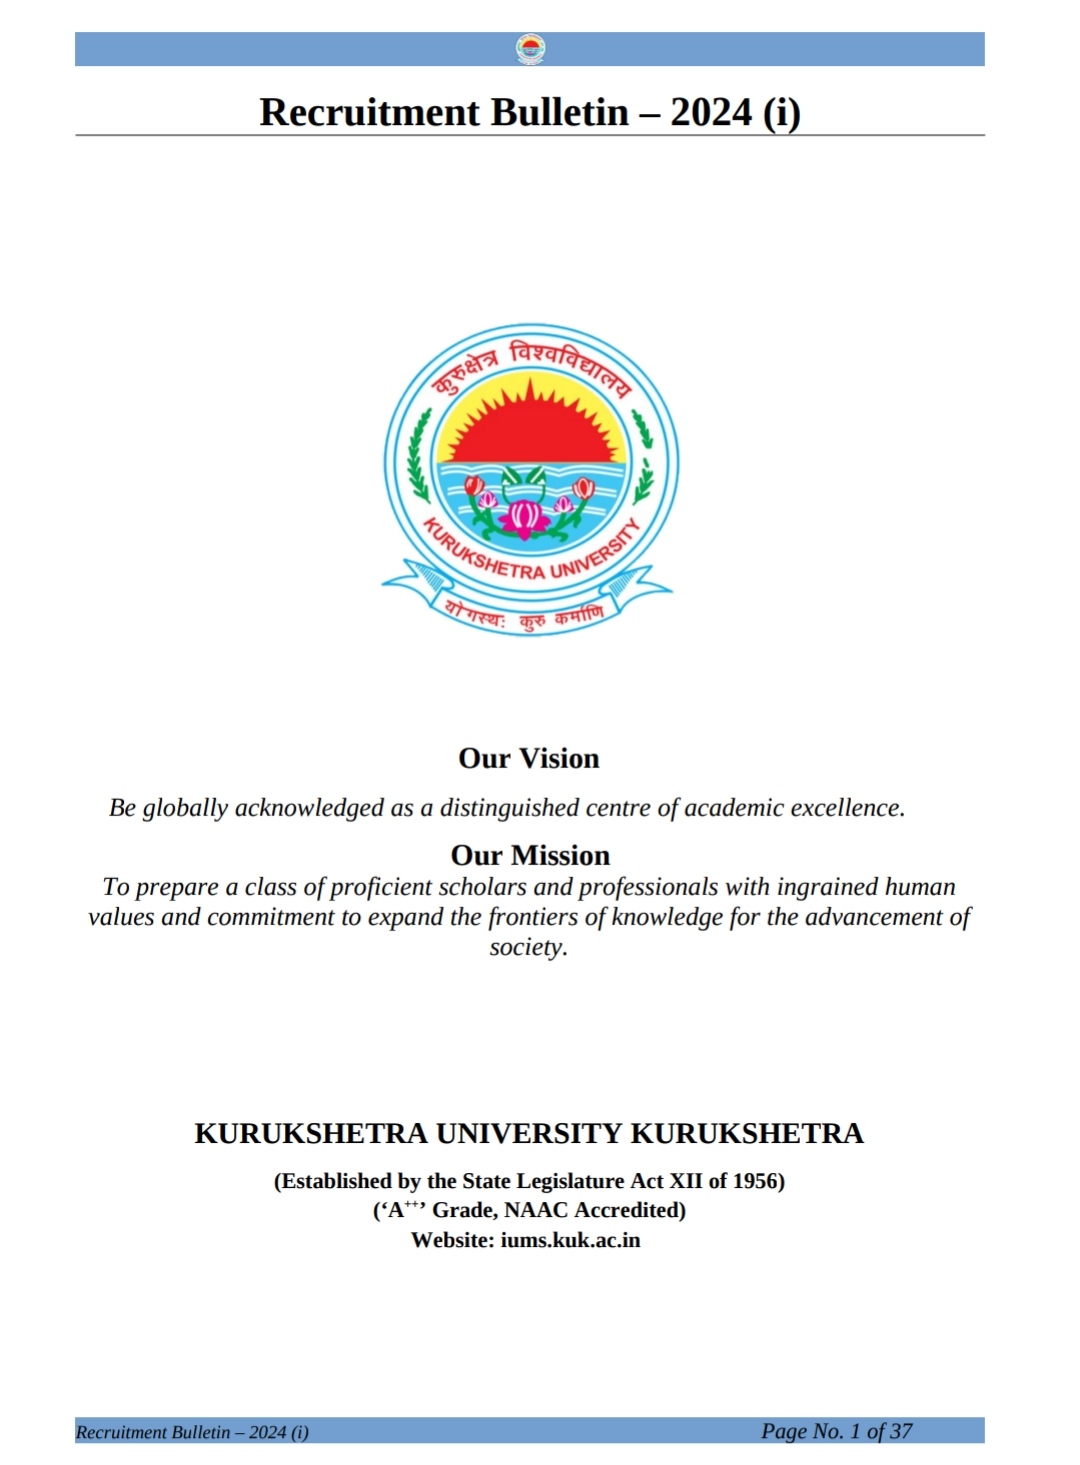 KUK Merit List 2021 (Out) | Kurukshetra University UG/ PG/ Diploma List